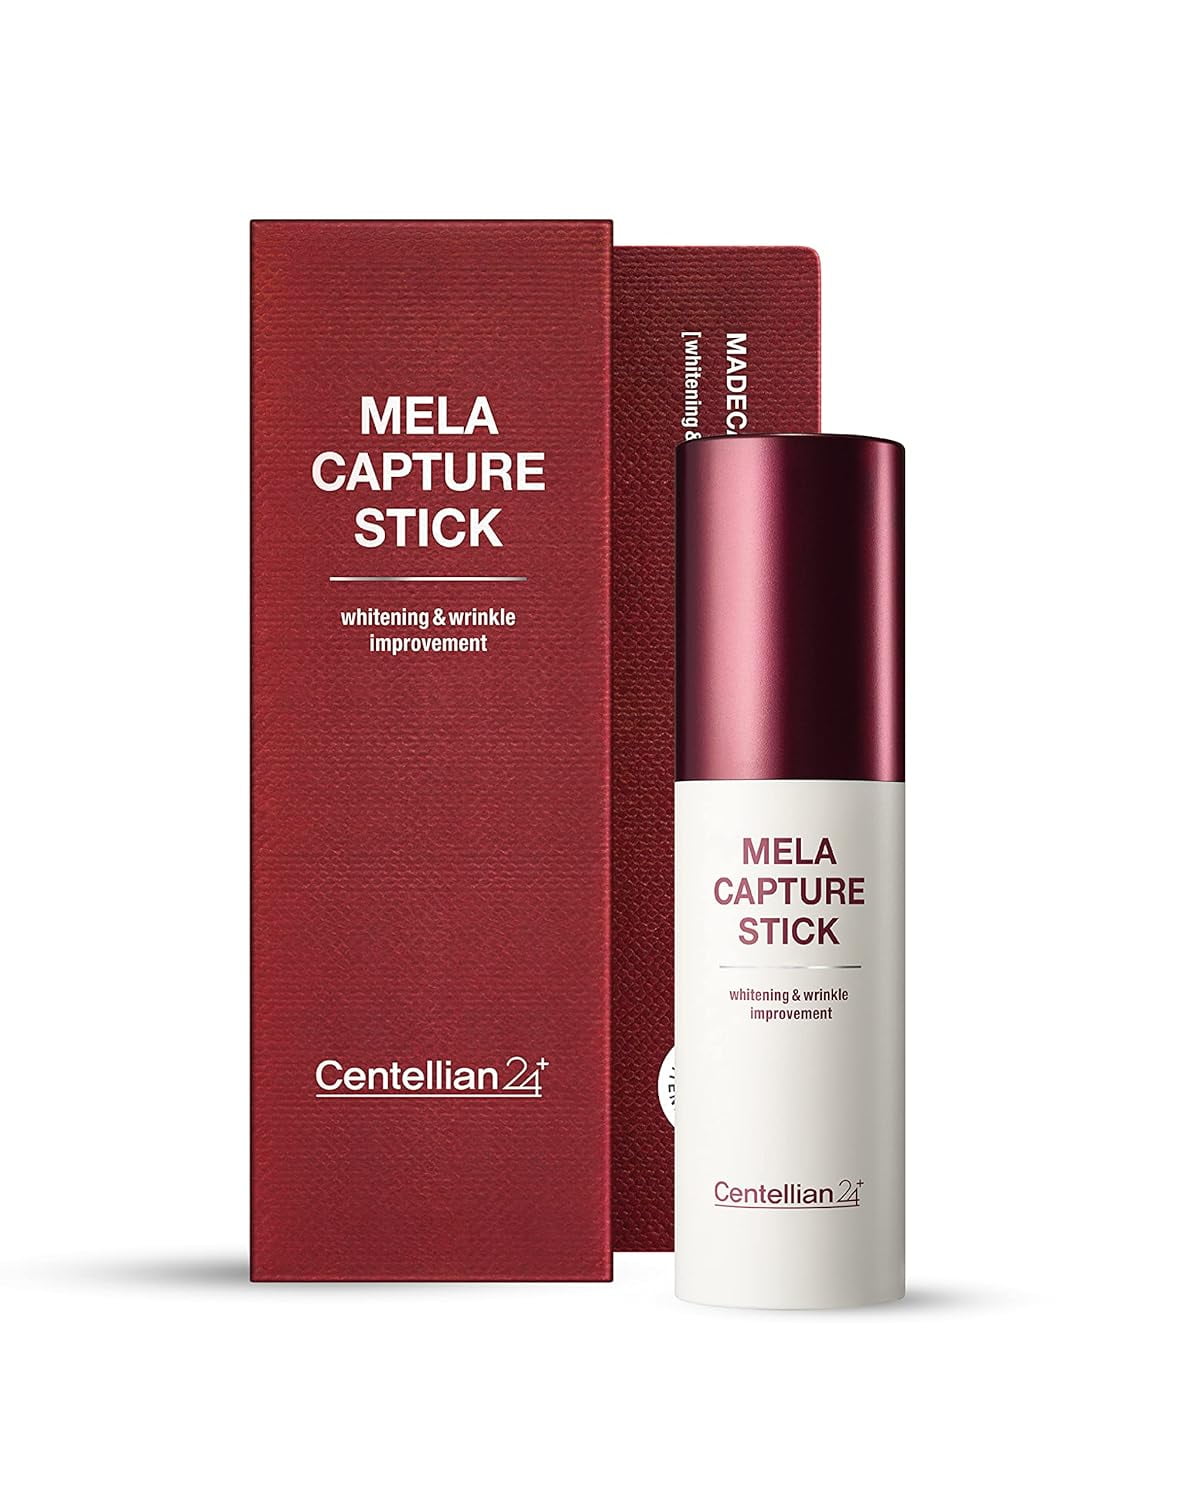 Centellian 24 Madeca mela Capture Stick (0.4oz) - Multi Balm Stick for Even  Skin Tone, Blemish and Freckles. Travel Essentials by Dongkook. TECA,  Centella Asiatica, Vitamin C. 